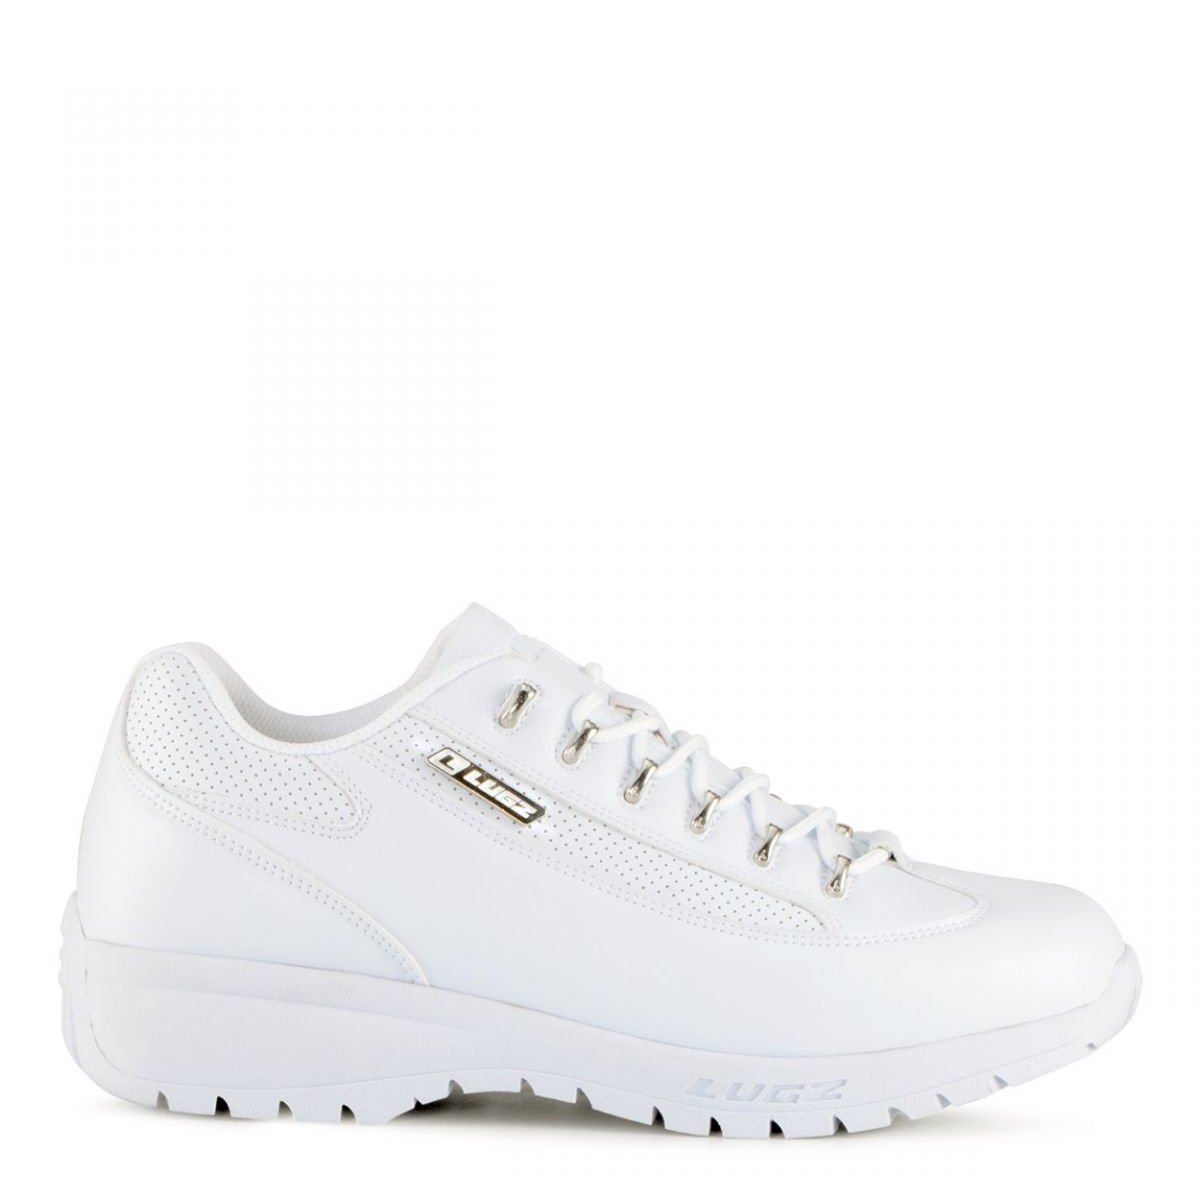 Lugz Men's Express Sneaker White - MEXPRSPV-100 WHITE - WHITE, 10.5